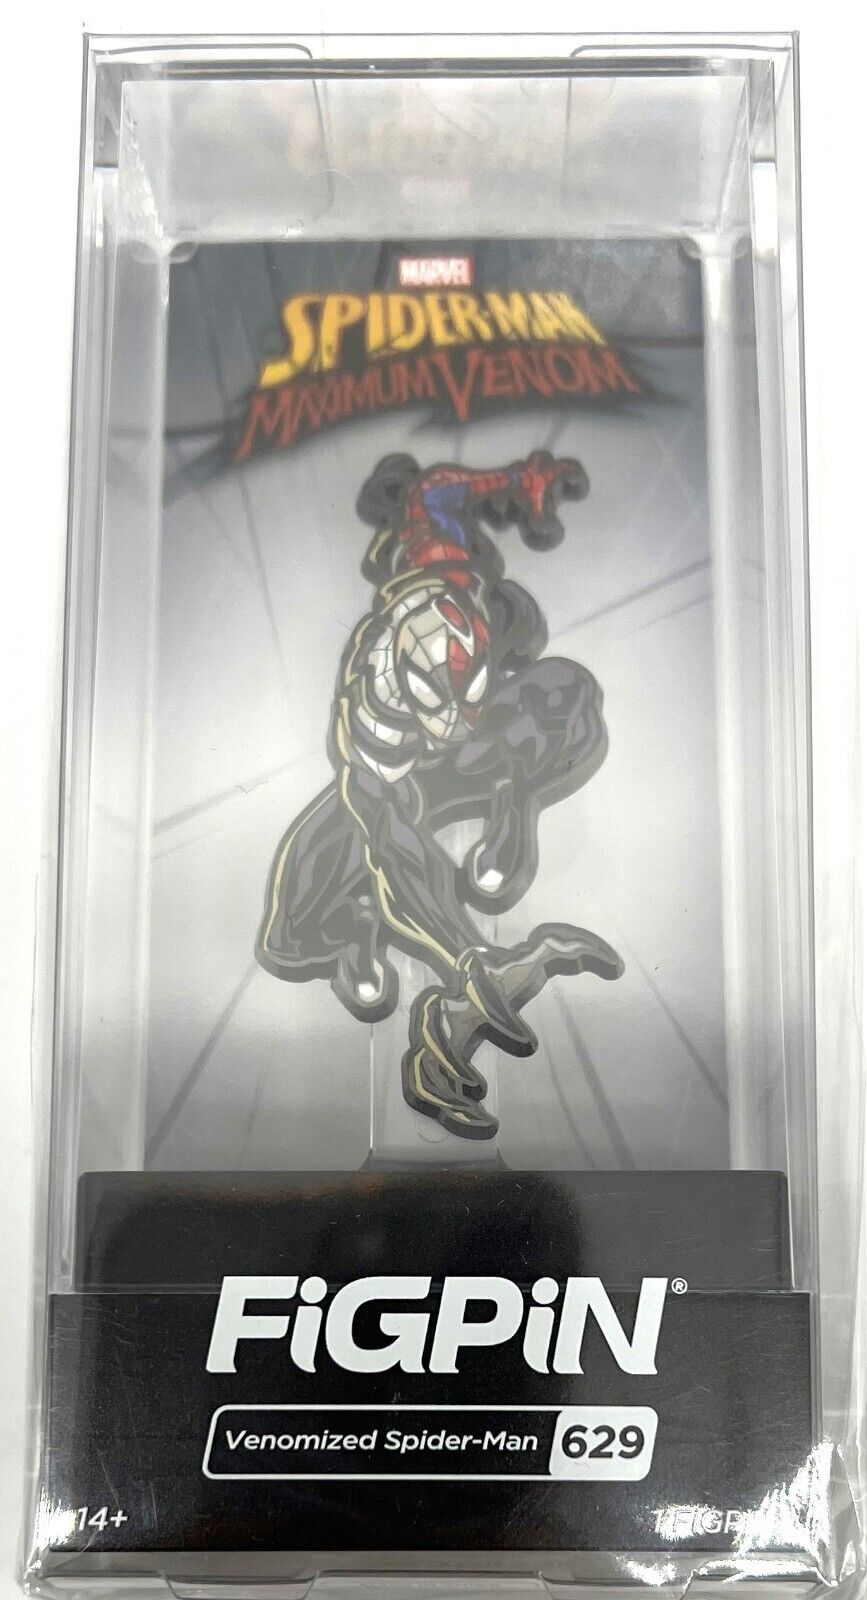 FiGPiN Marvel Spider-Man Maximum Venom Venomized Spider-Man #629 Collectible Pin